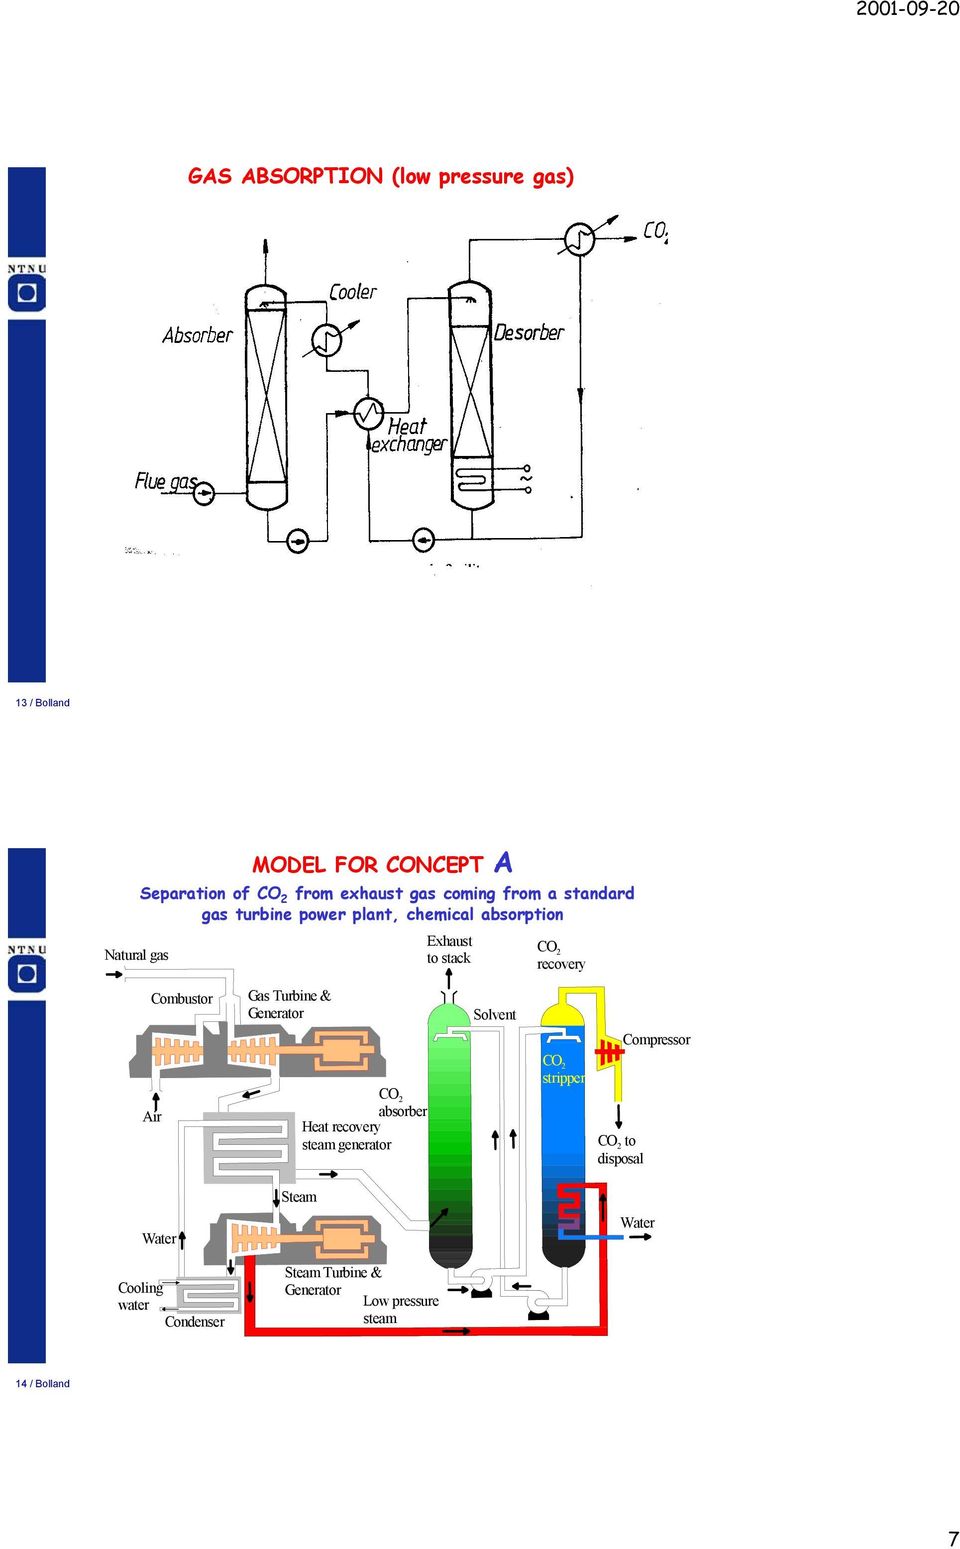 Combustor Gas Turbine & Generator Solvent Compressor stripper Air absorber Heat recovery steam generator